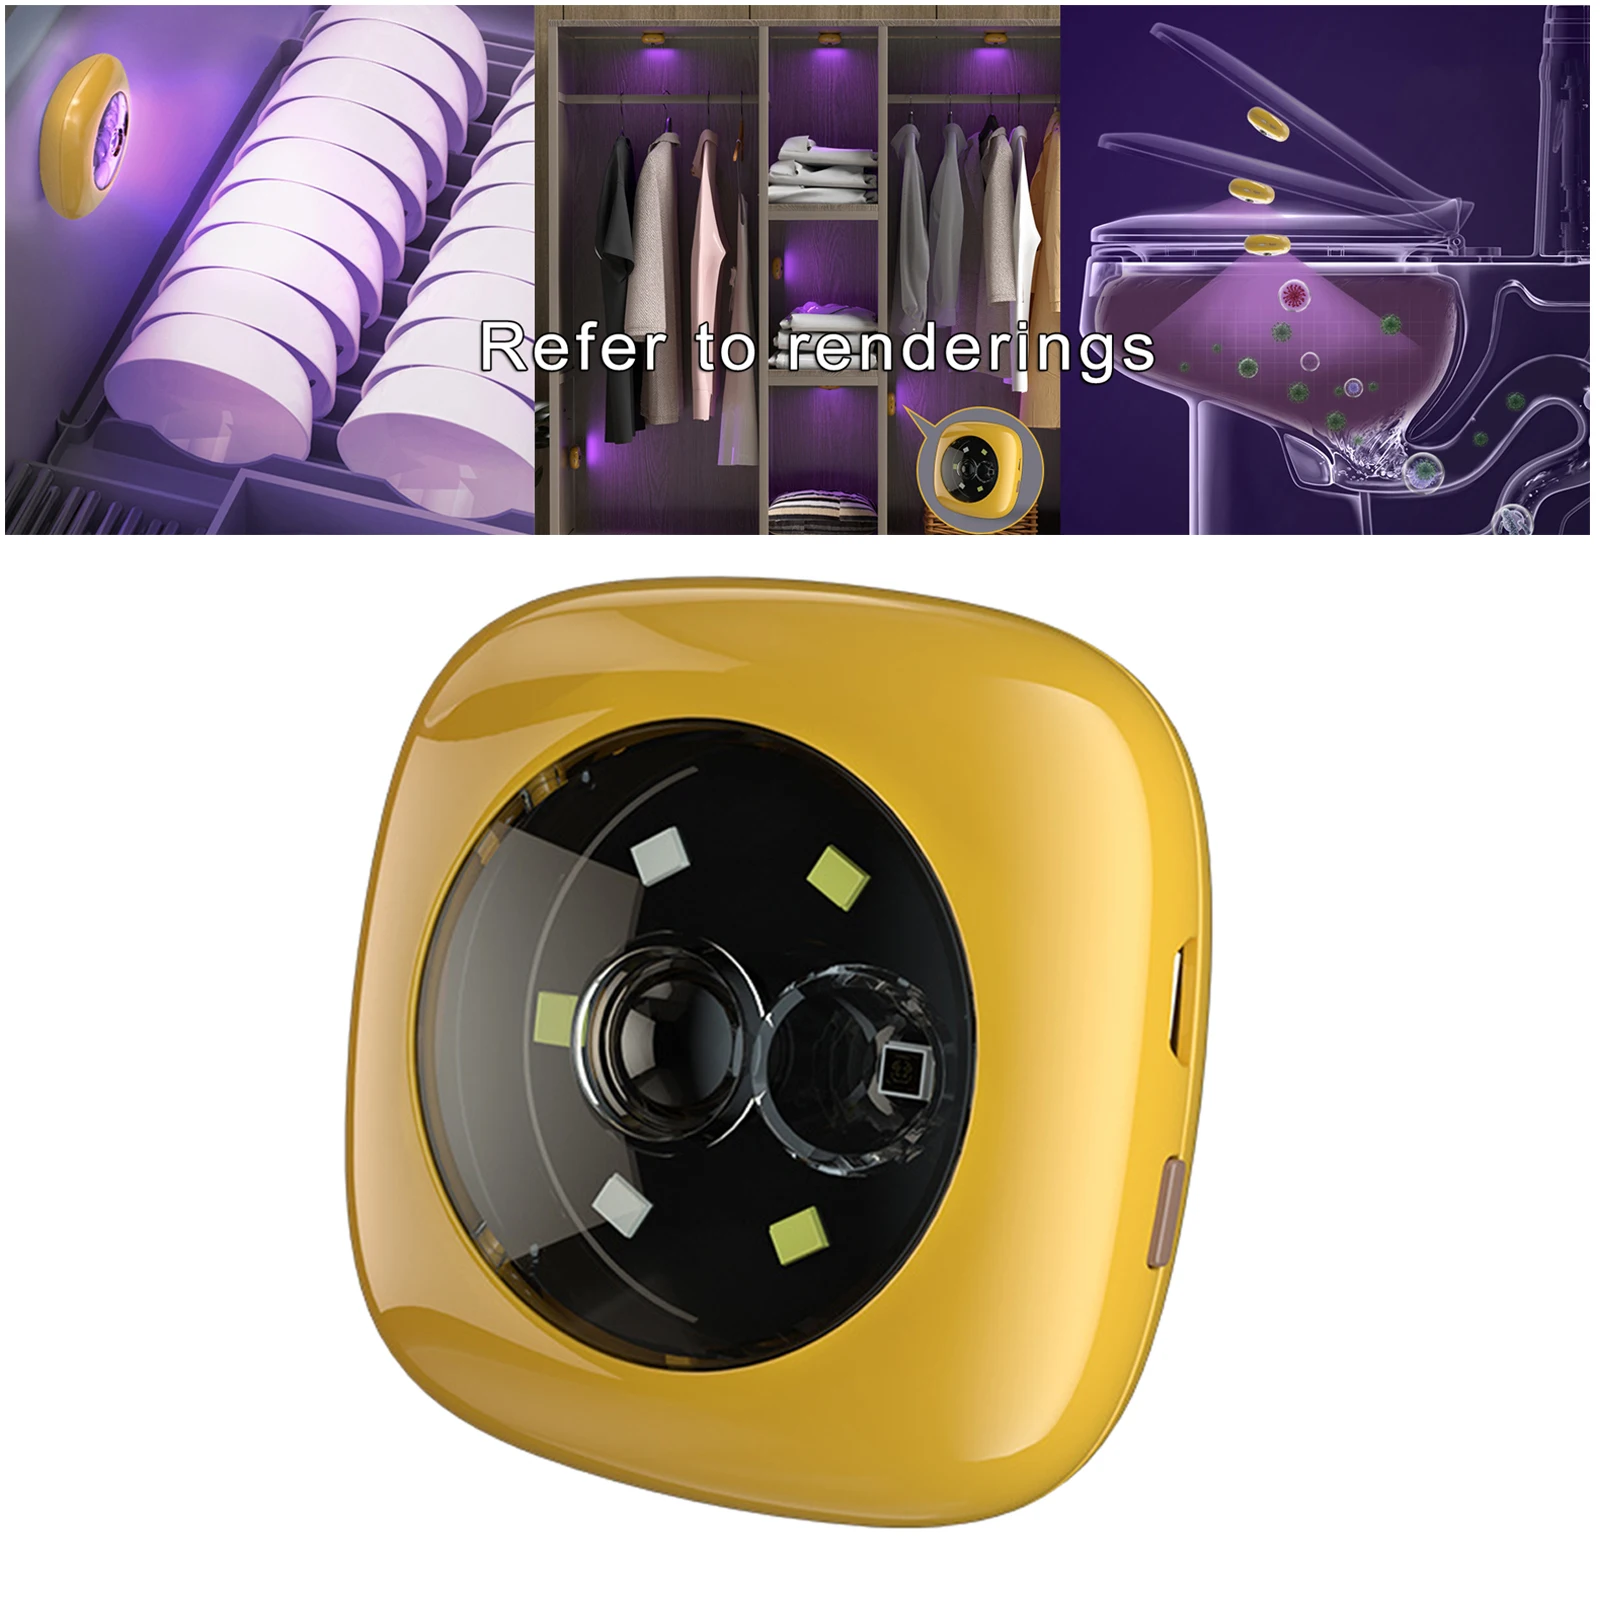 UV Toilet Light Sterilizer UVC Germicidal Lamp Home Bathroom Cabinet Toilet Disinfection Motion/Light Sensor Night Light